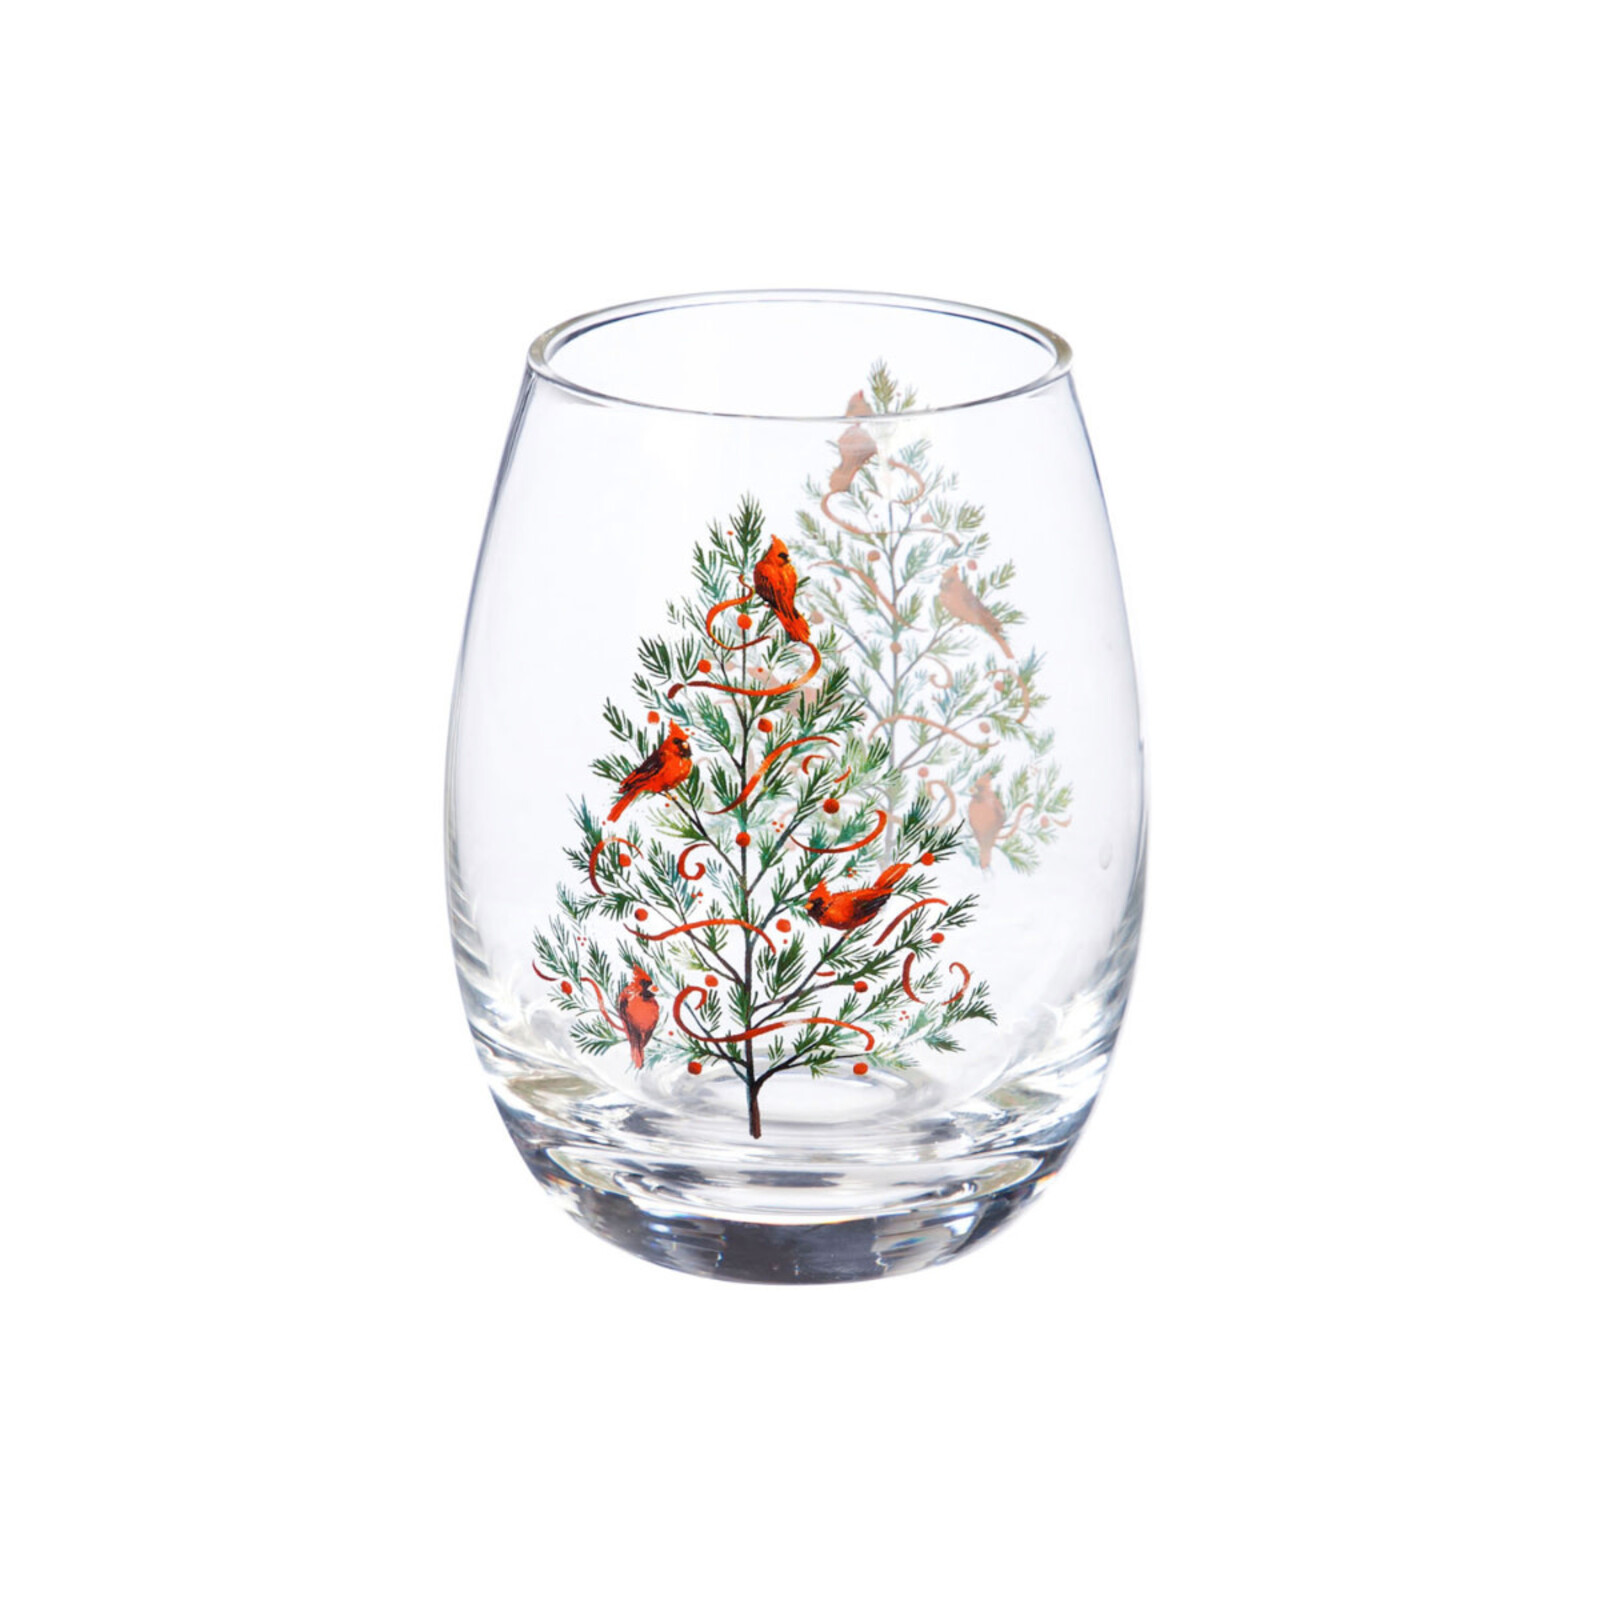 Evergreen Enterprises Stemless Wine Glass, 17 OZ, Christmas Heritage   3SL7728 loading=